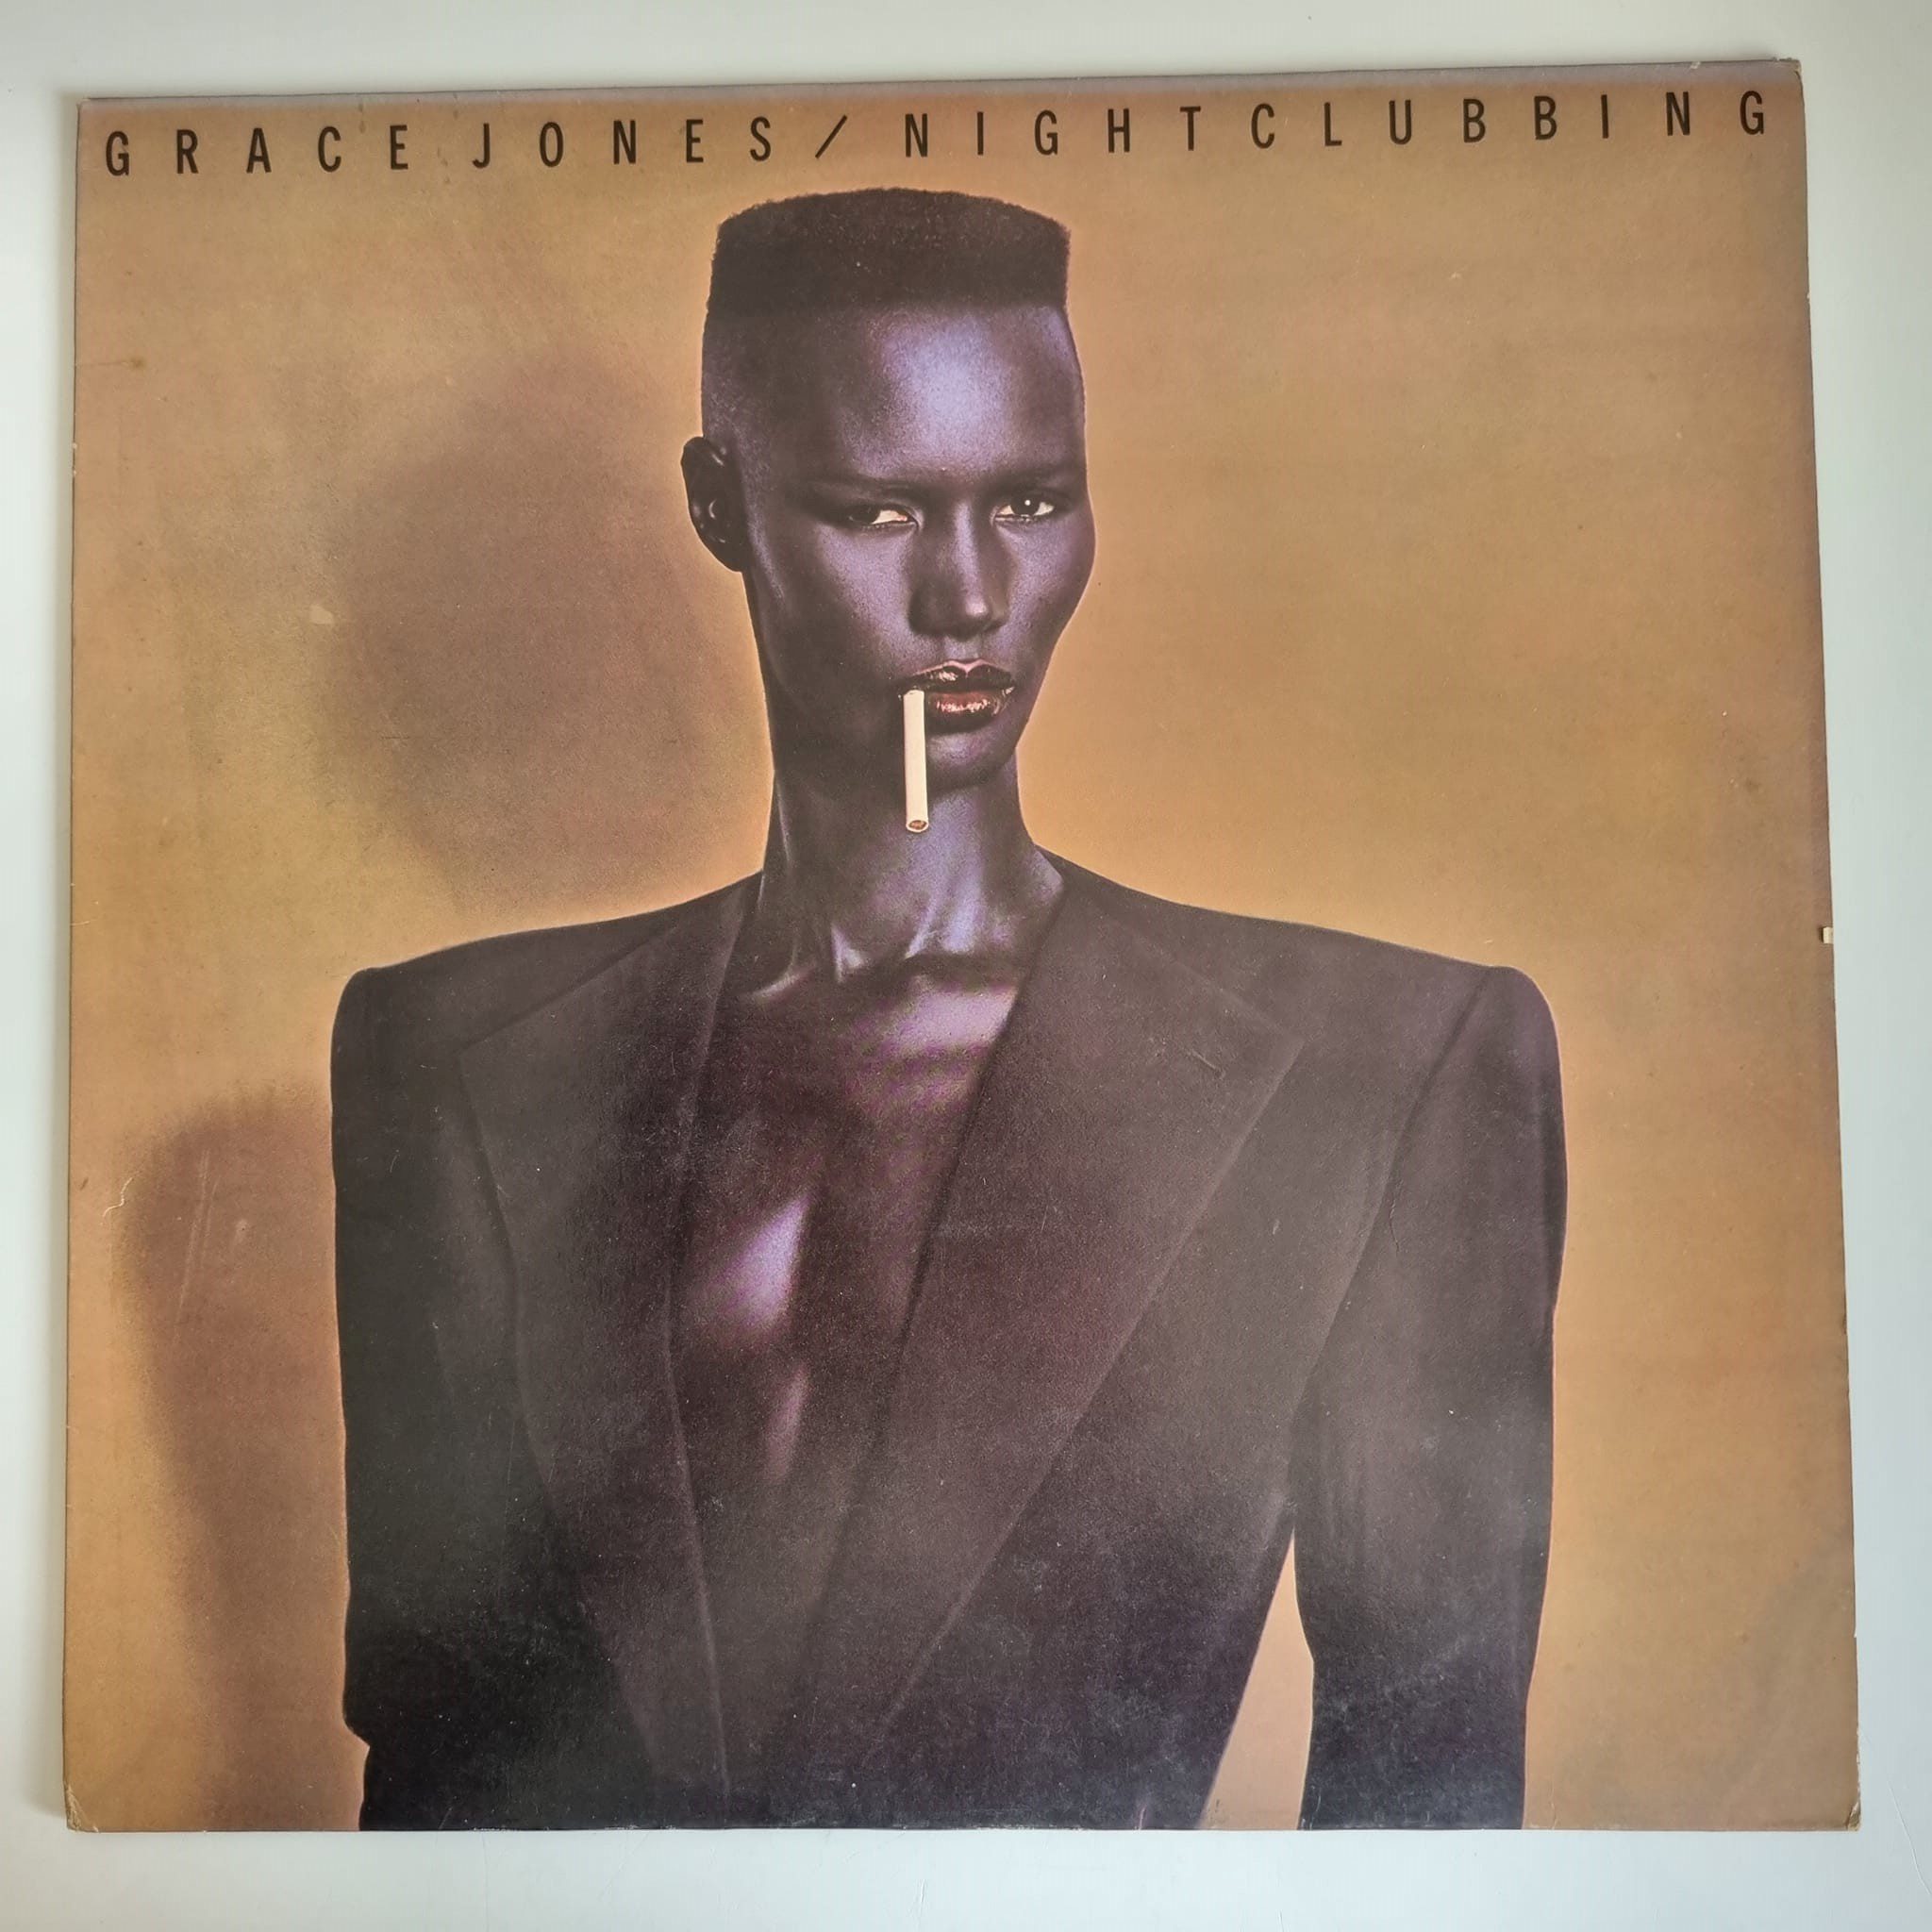 Grace Jones - Nightclubbing - LP Record Vinyl album